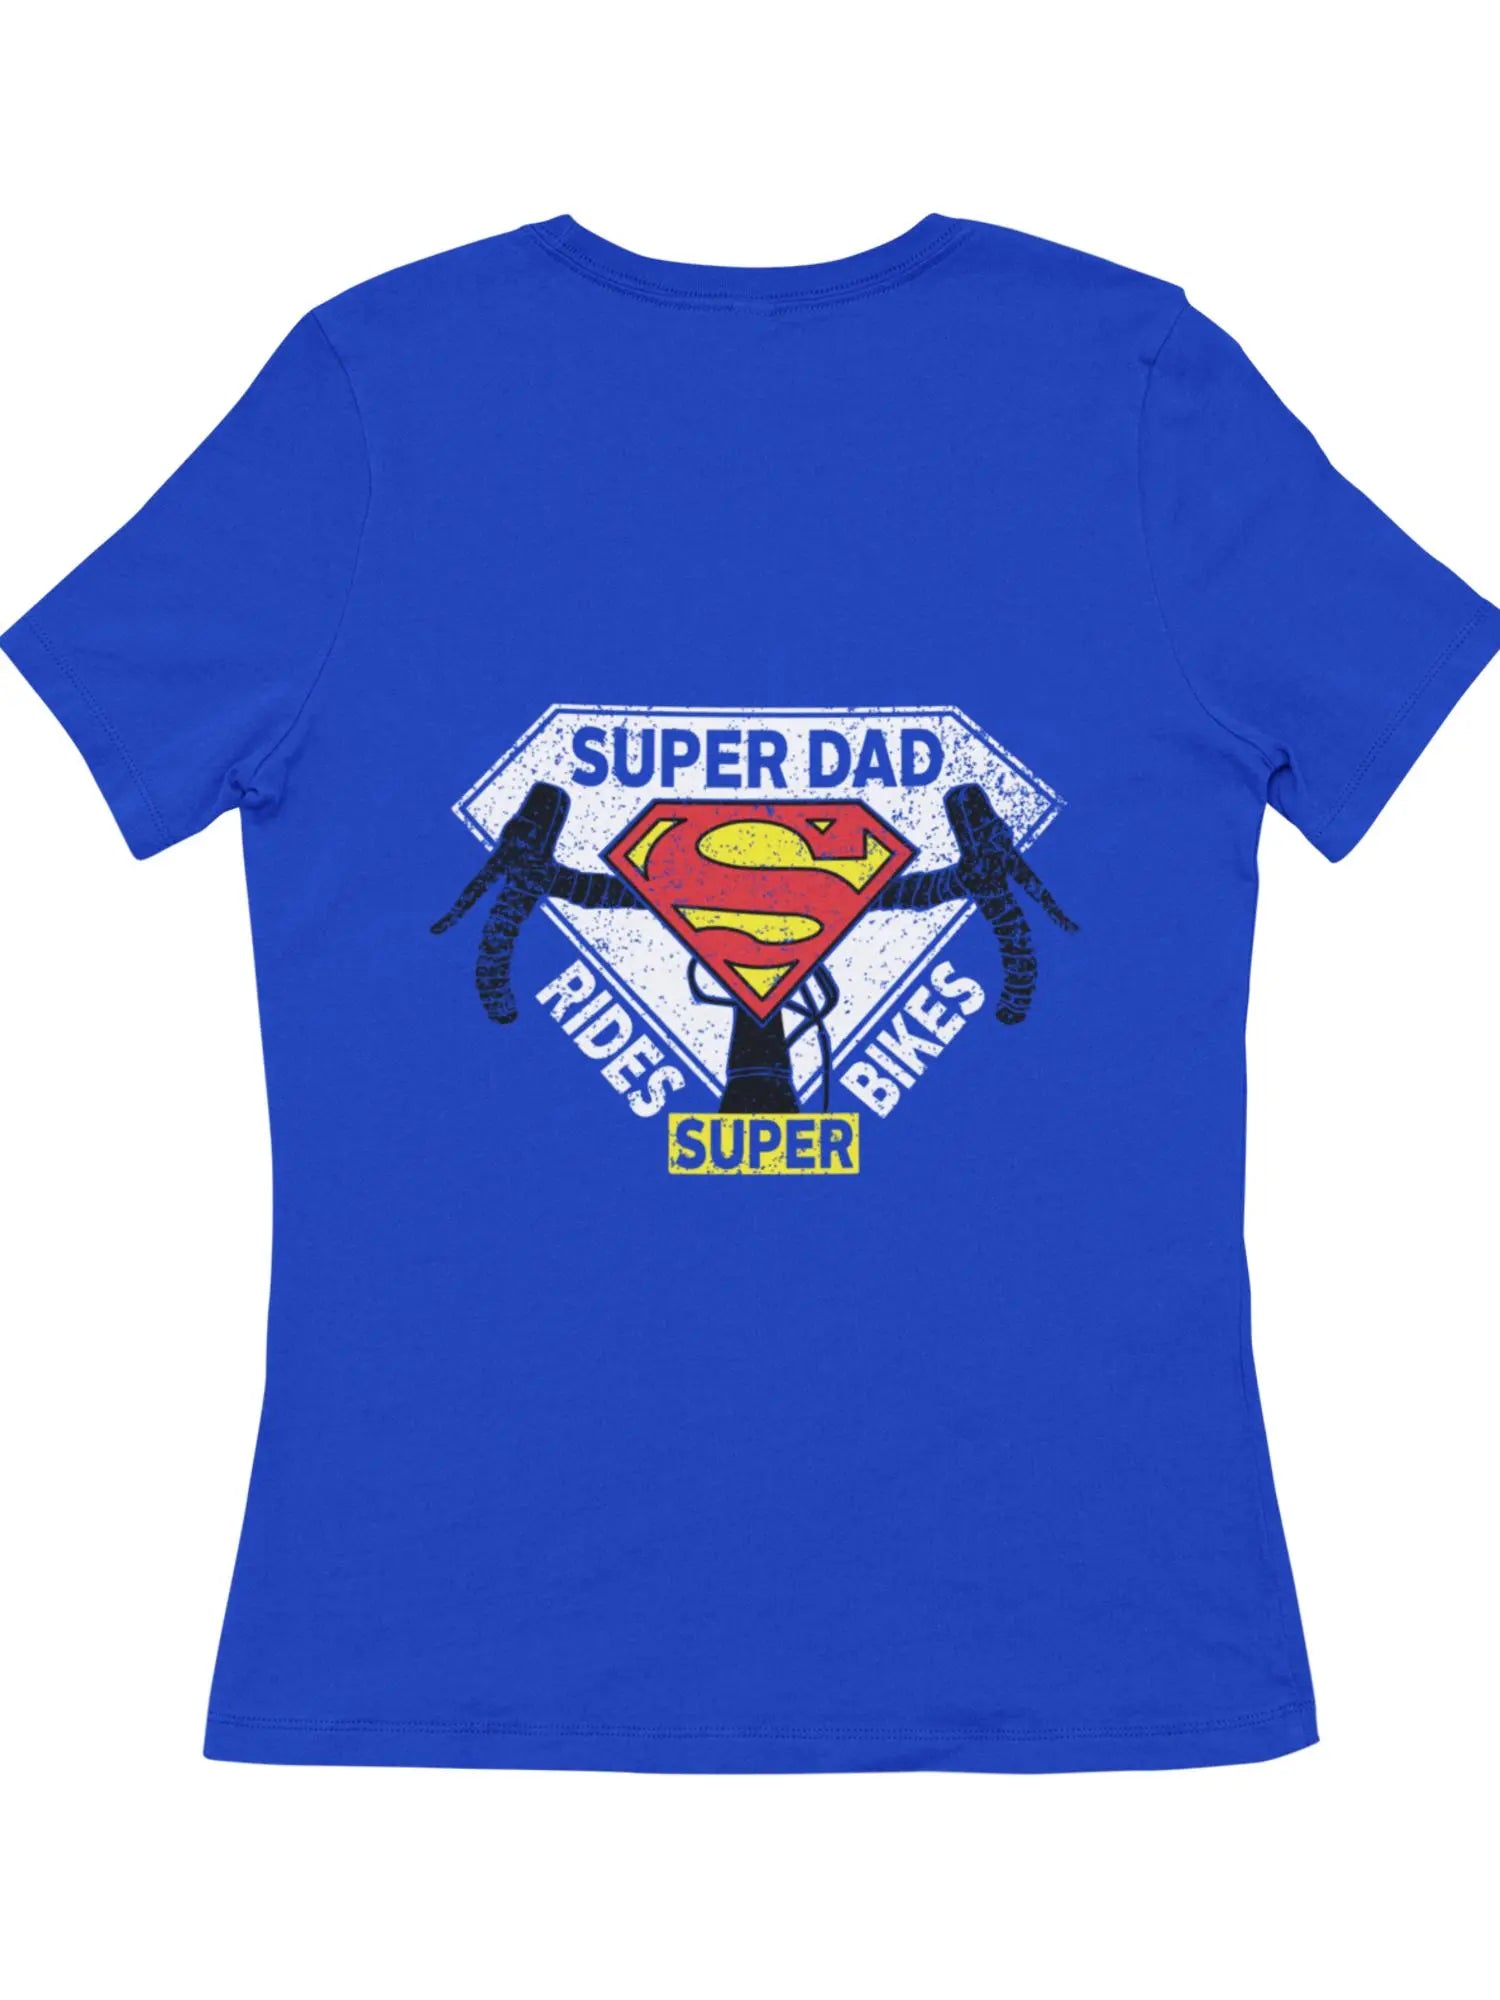 Super Dad Rides Super Bikes Bicycle T-Shirt